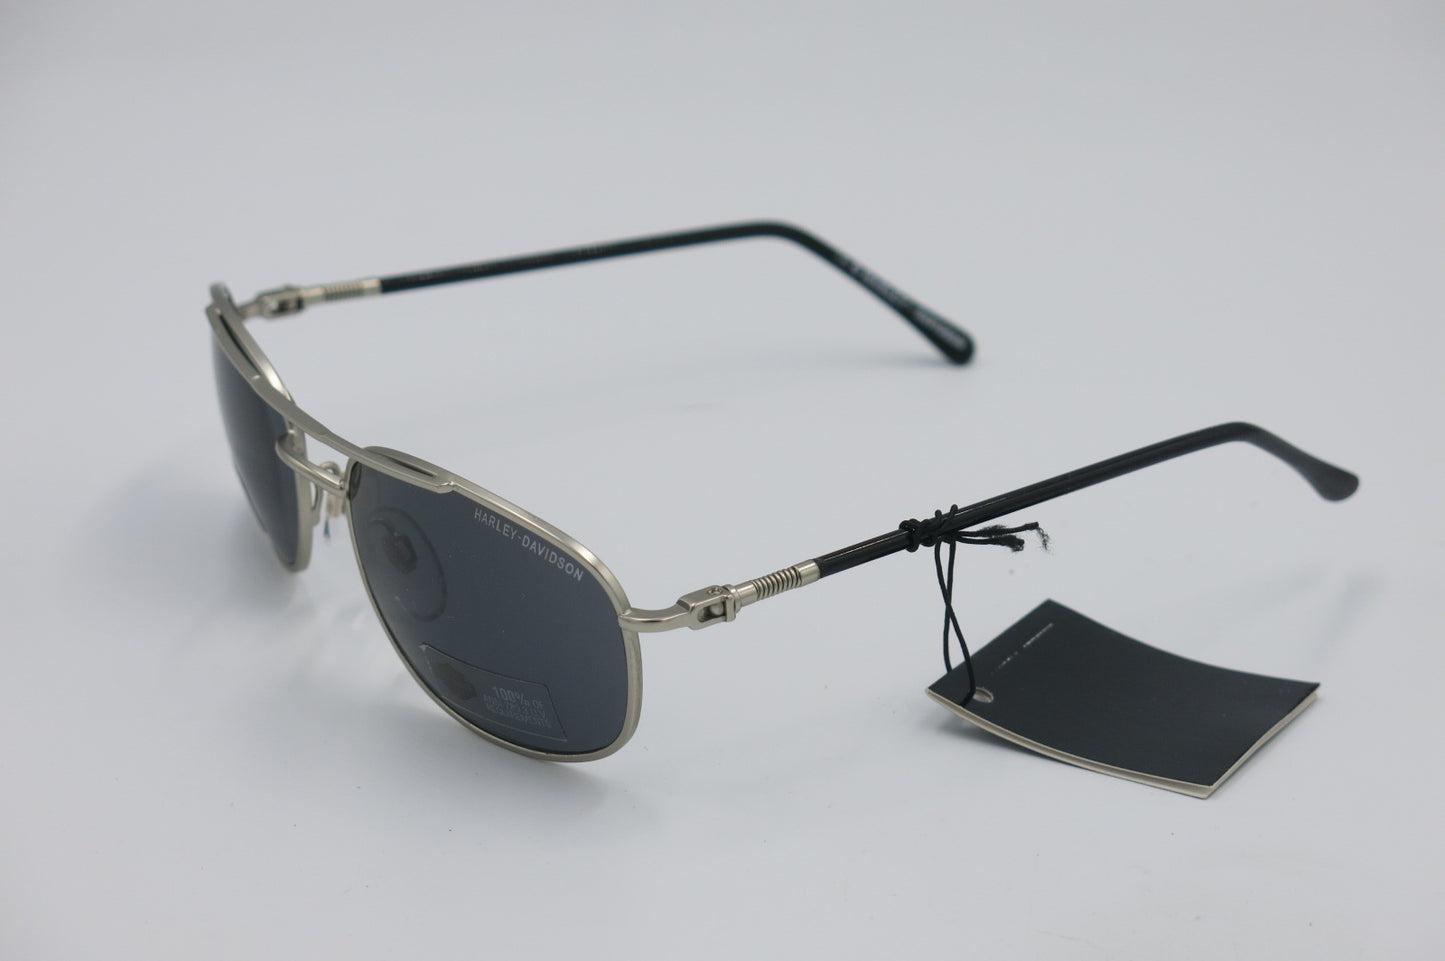 Harley Davidson Sunglasses - 306